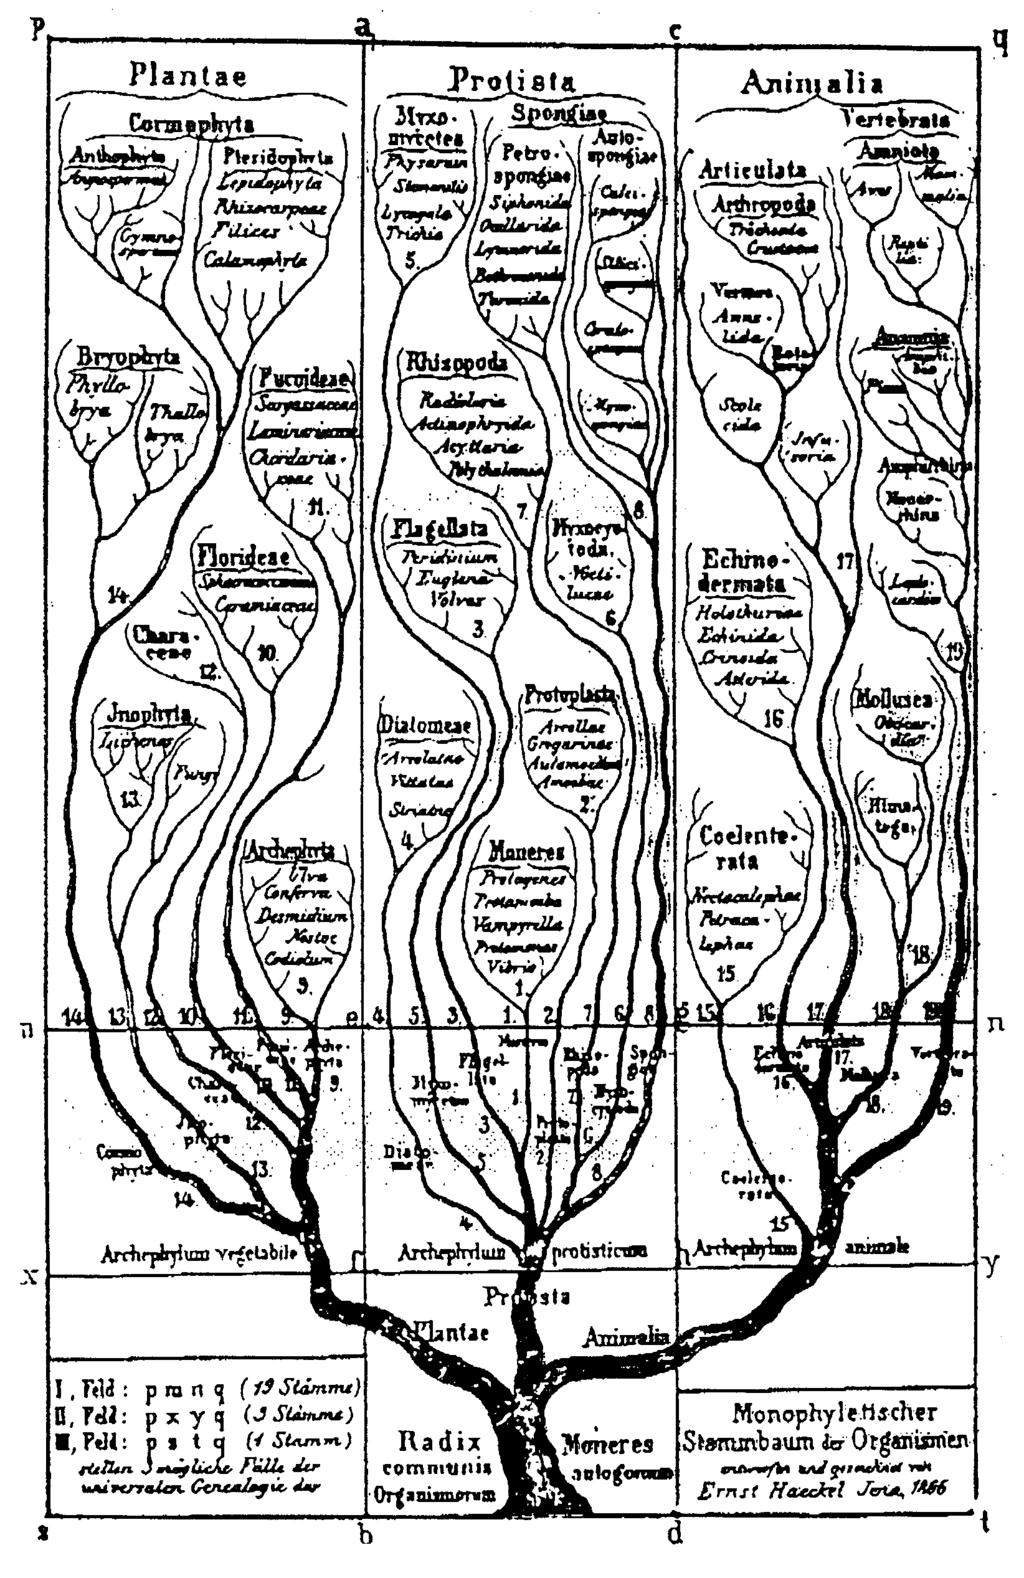 66 Bioinformatics I, WS 09-10, D. Huson, December 1, 2009 5 Phylogeny Evolutionary tree of organisms, Ernst Haeckel, 1866 5.1 References J. Felsenstein, Inferring Phylogenies, Sinauer, 2004. C.